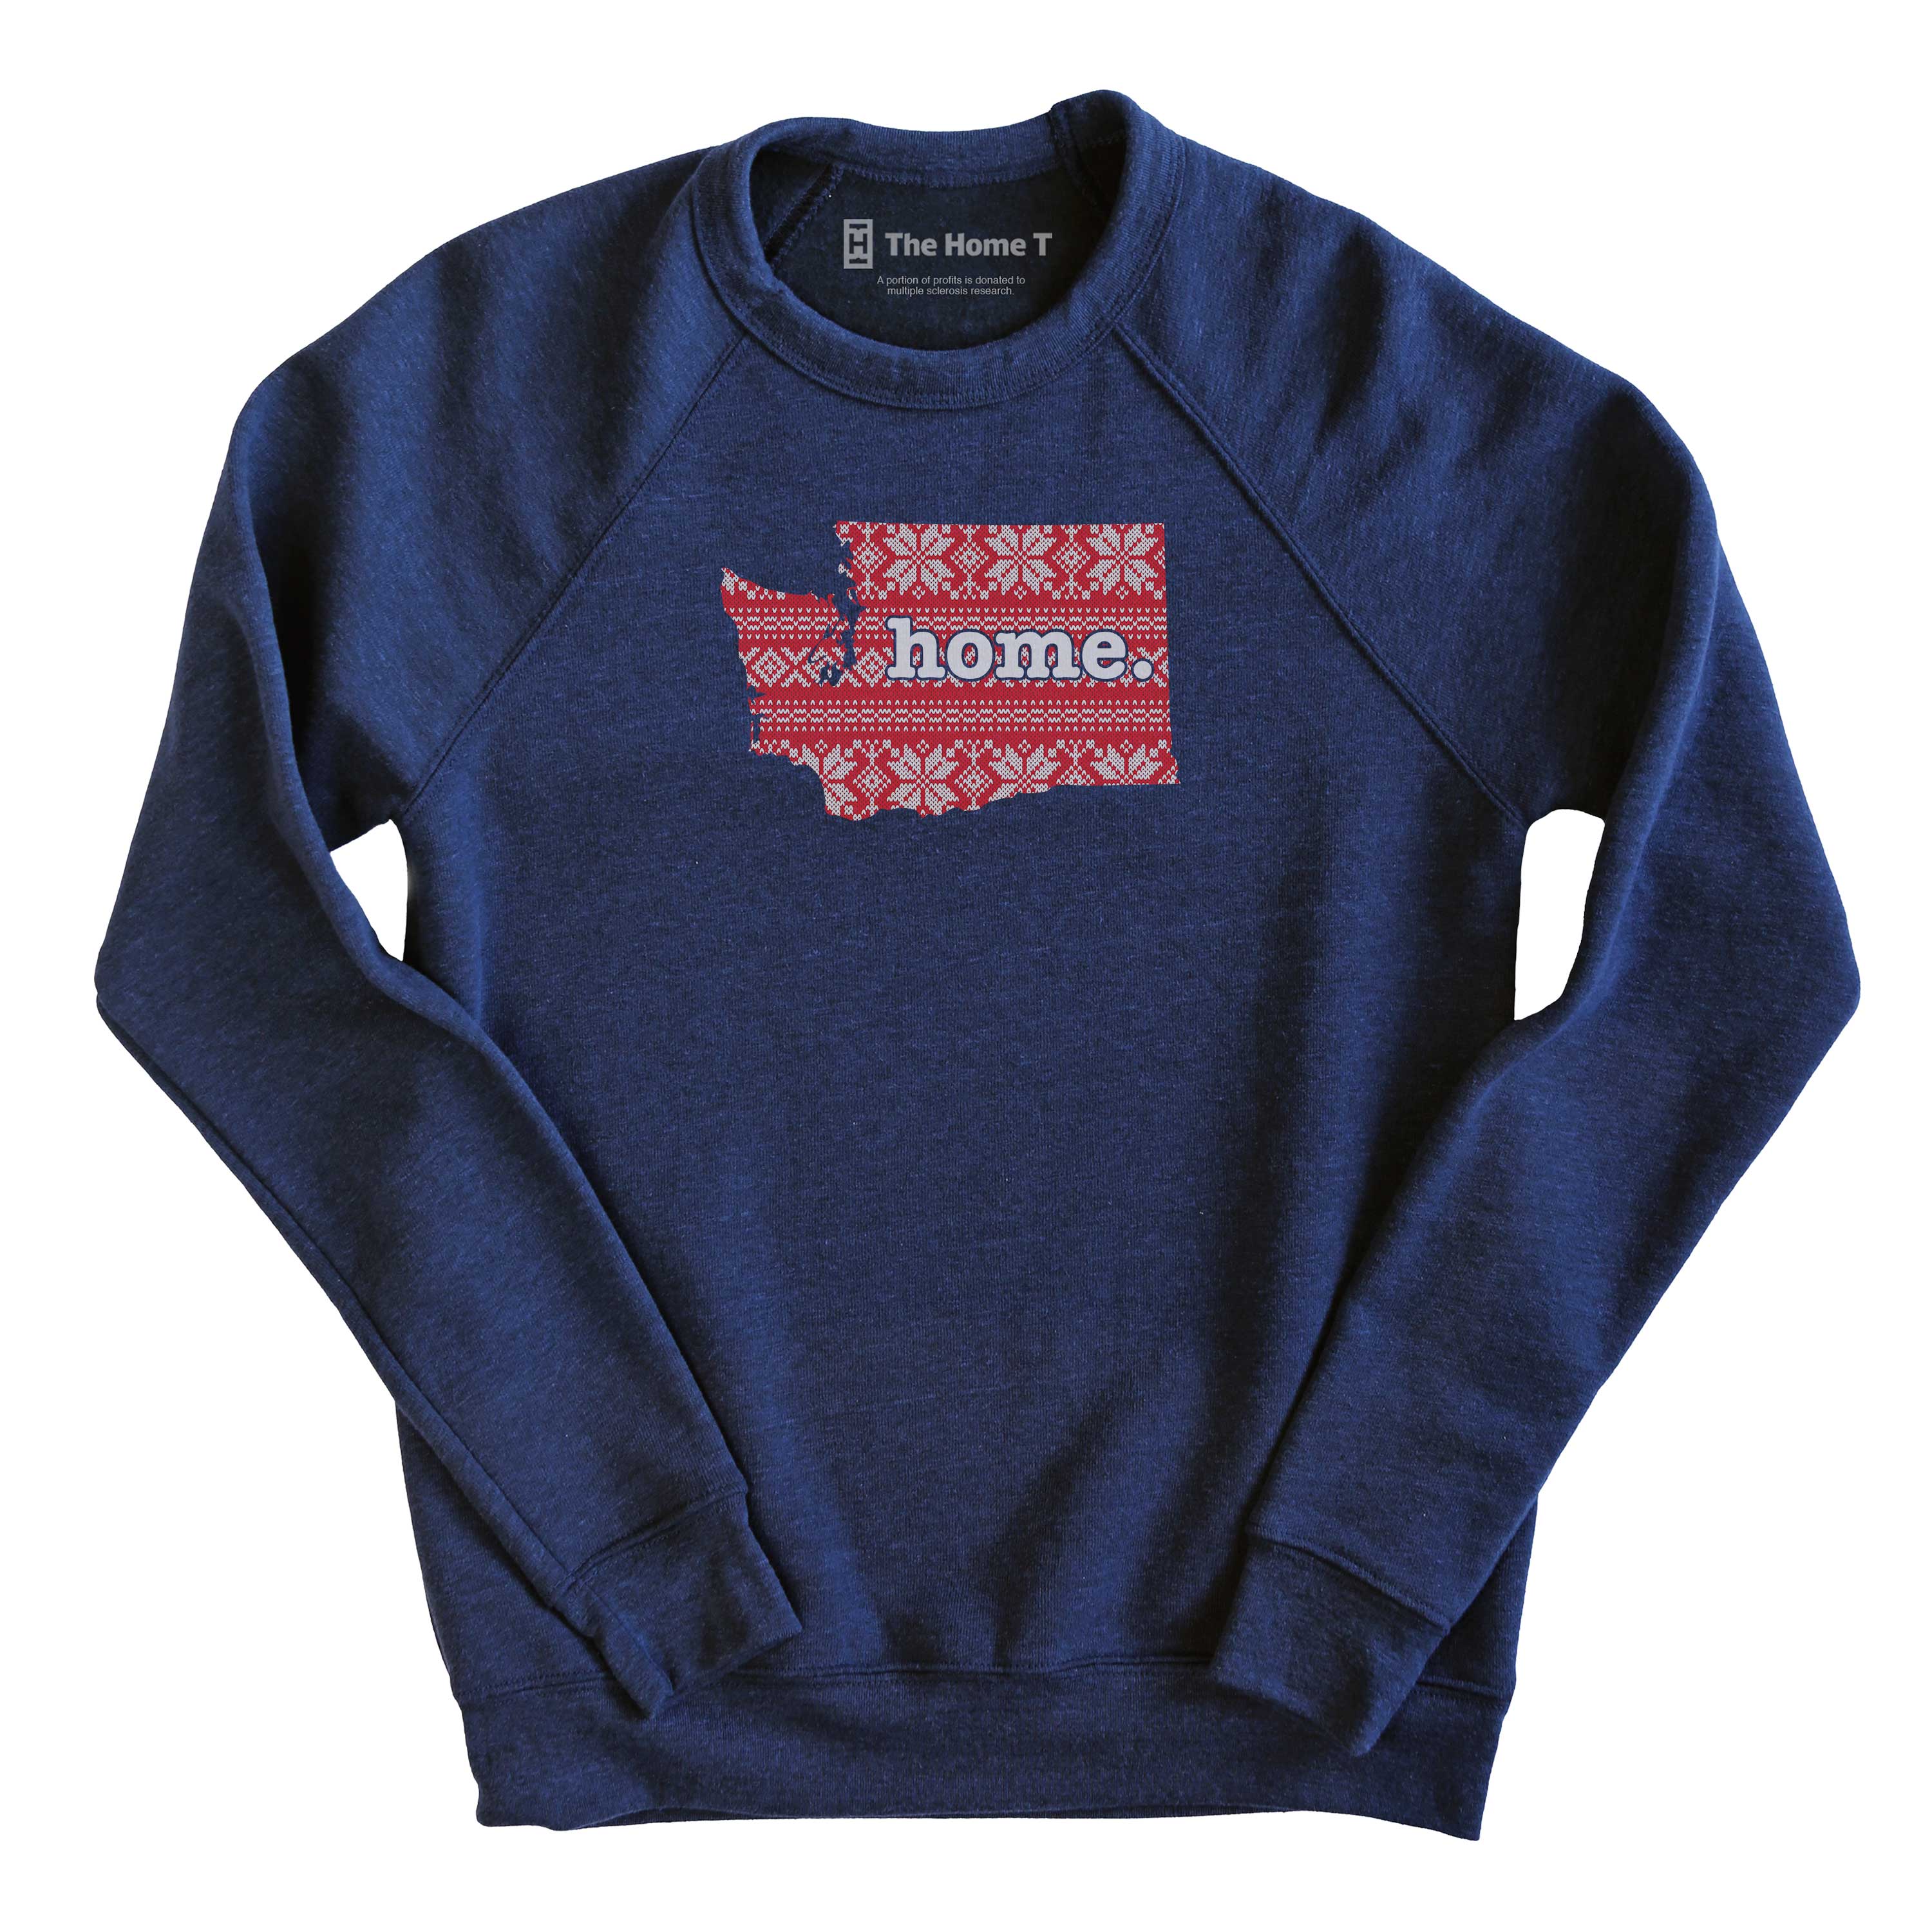 Washington Christmas Sweater Pattern Christmas Sweater The Home T XS Navy Sweatshirt